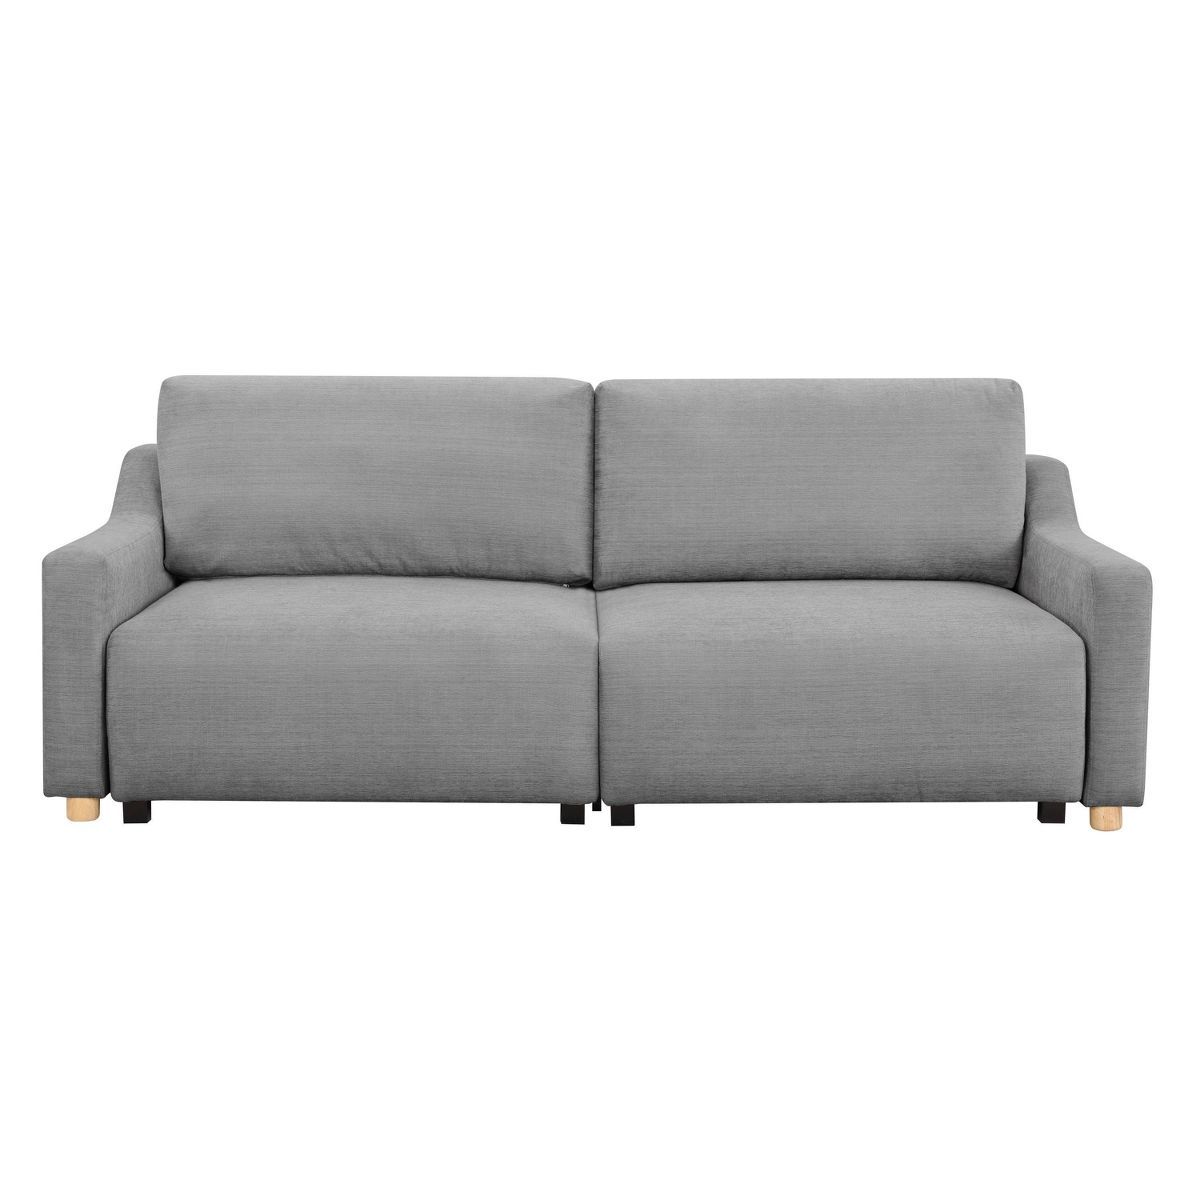 Serta Glendale Convertible Sofa Gray | Target